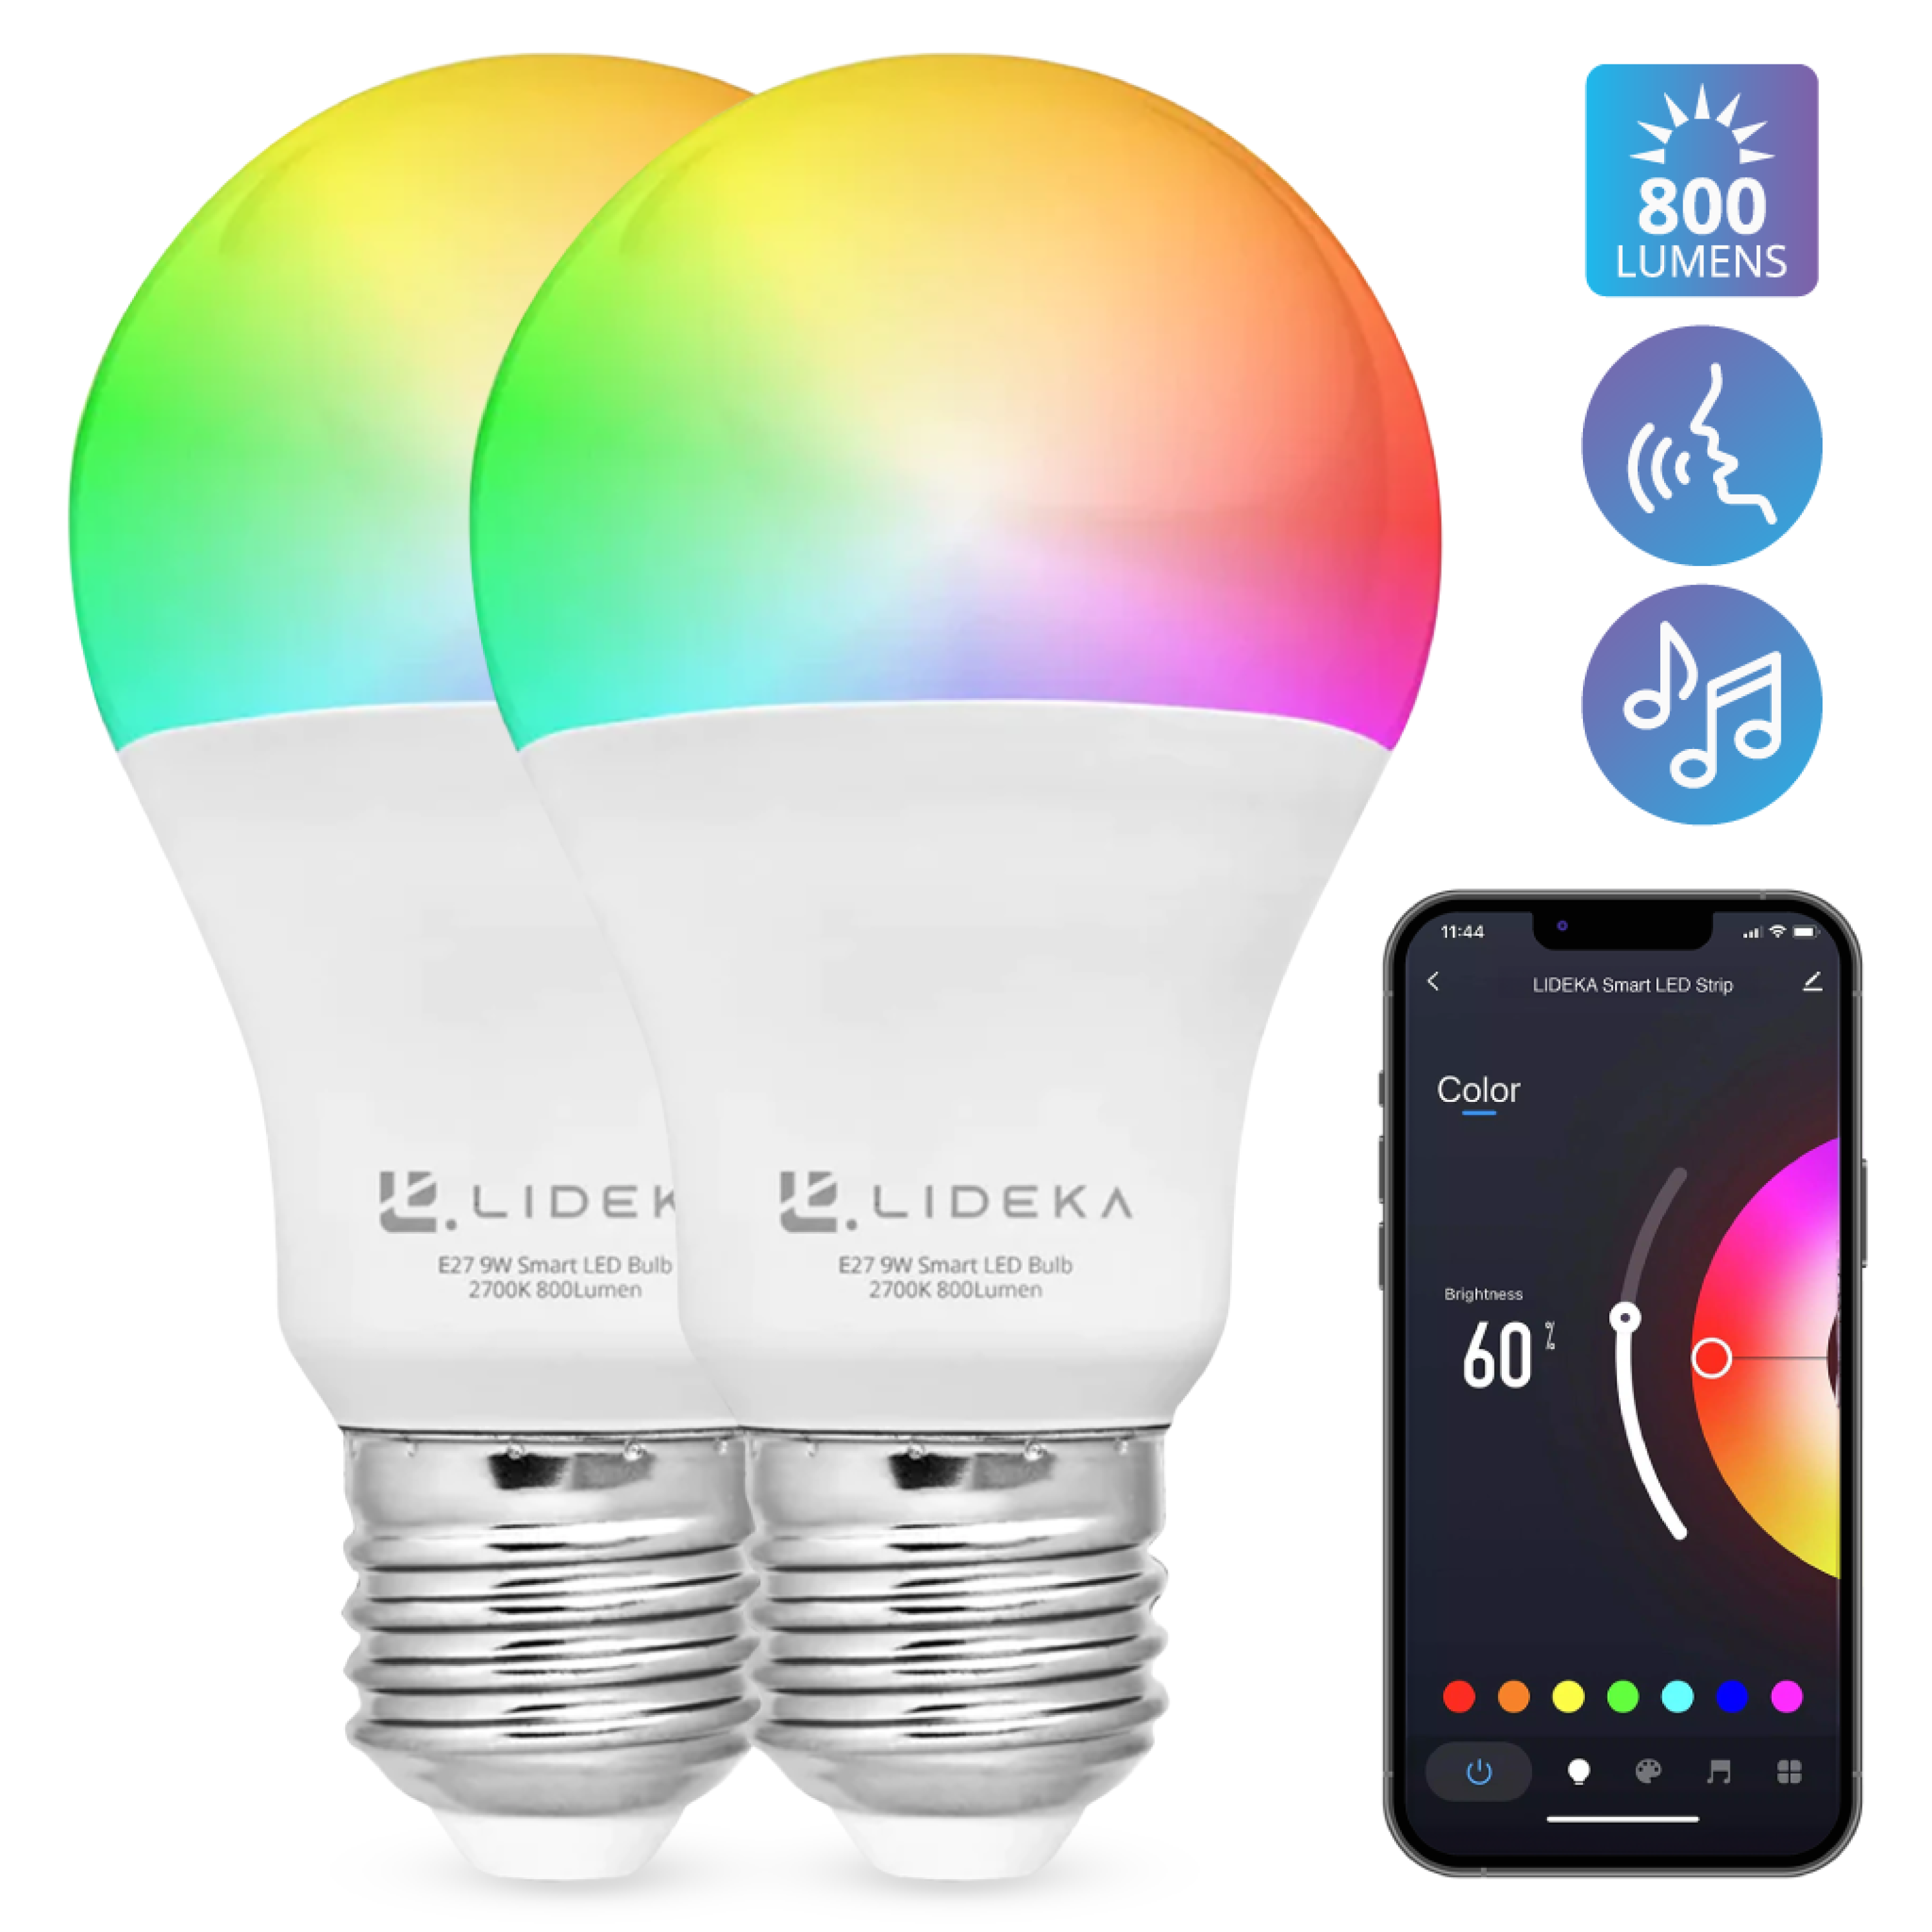 Lampe Dimmbare 5 WiFi Multicolors Smart E27 LED-Leuchtmittel Watt 9W E27 LIDEKA LED 2er-pack